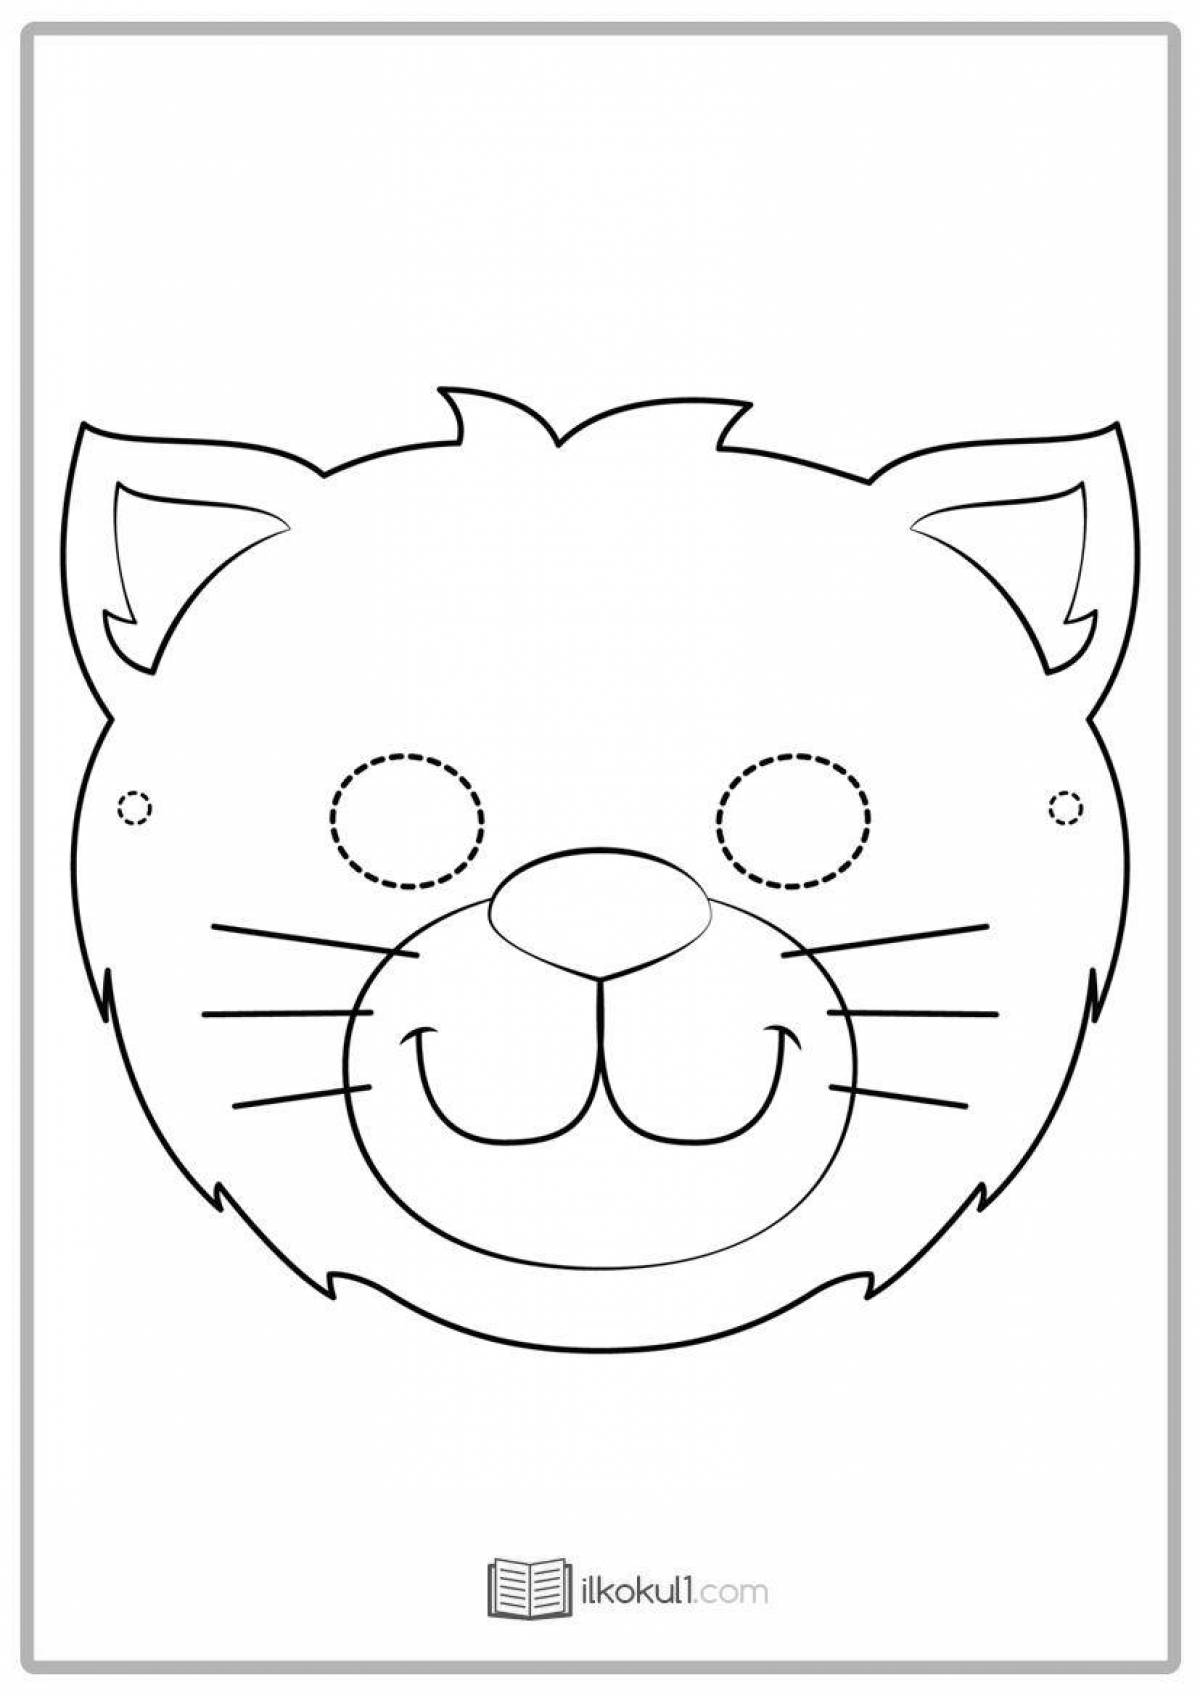 Fun coloring cat face for kids